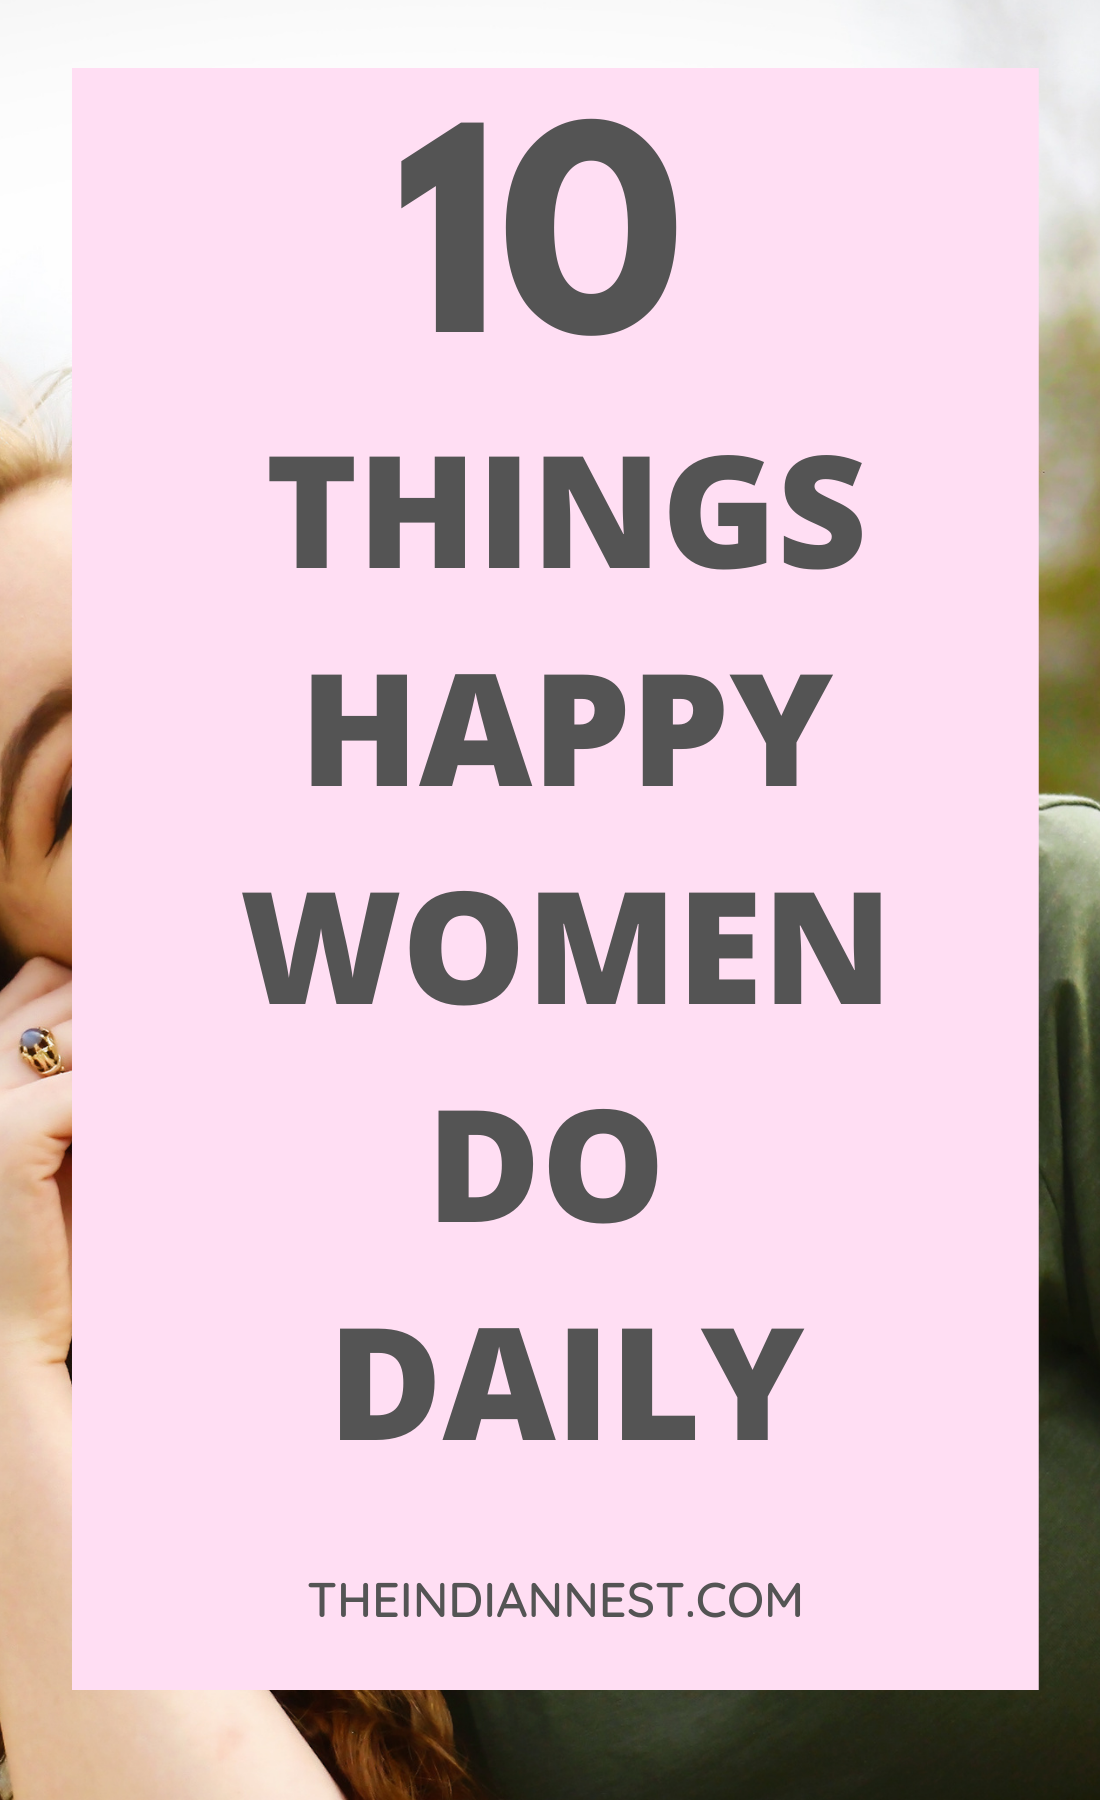 10 things happy women do daily